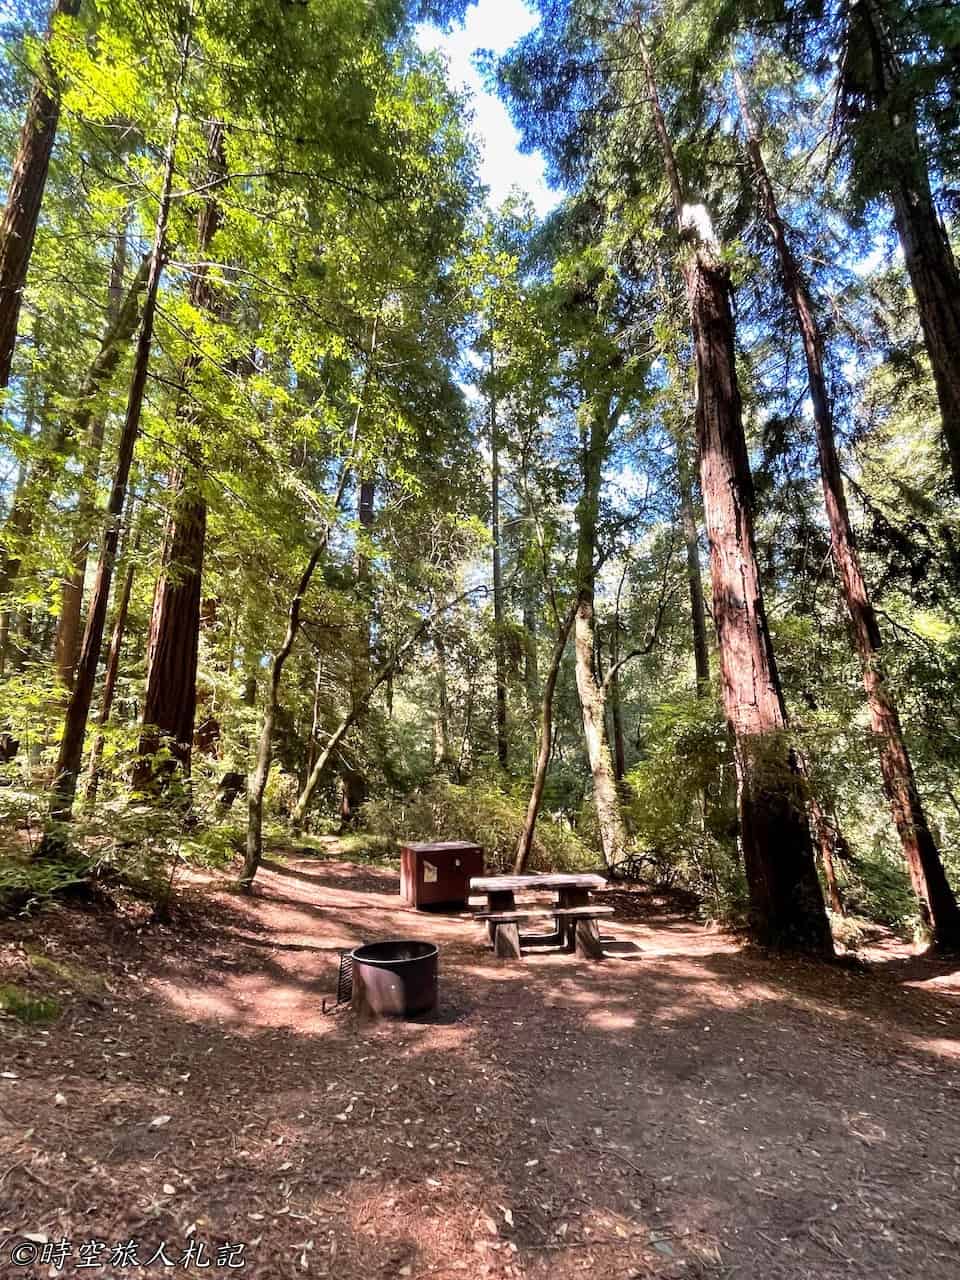 Portola redwood state park,Portola redwood campground,Tiptoe falls 6